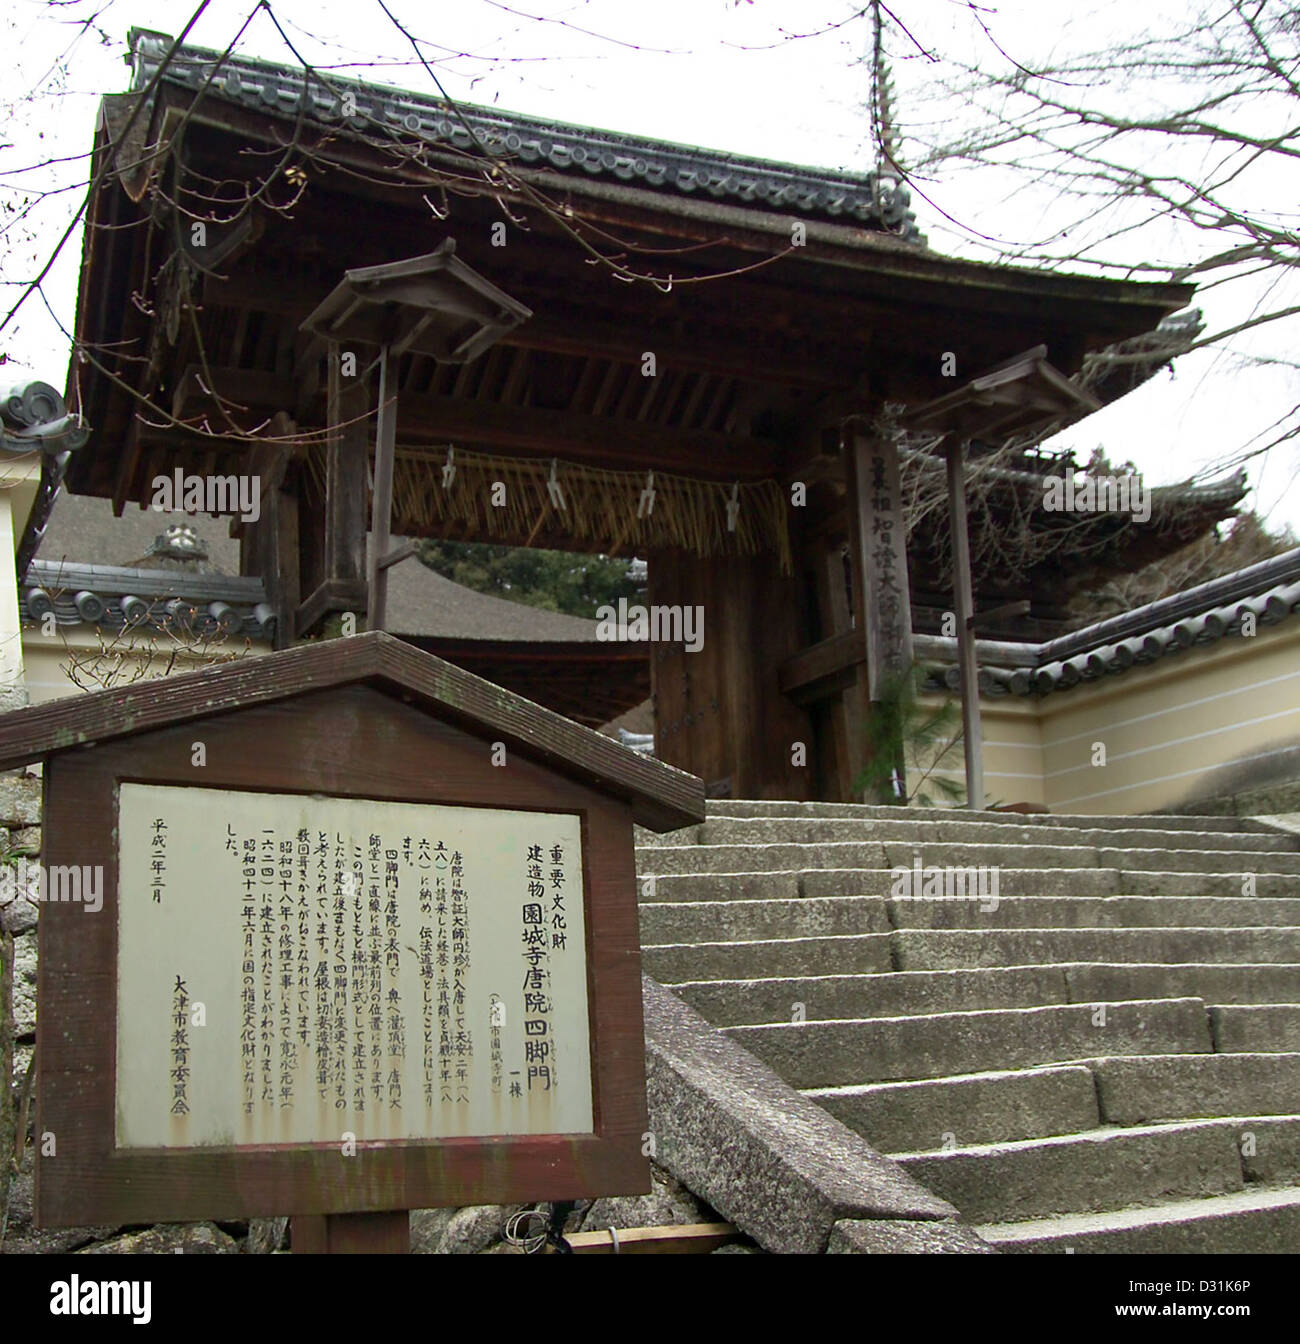 This gate is the Shikyaku-mon, the four-legged gate at Mii-dera, a Buddhist temple in Otsu, Shiga Prefecture, Japan Stock Photo